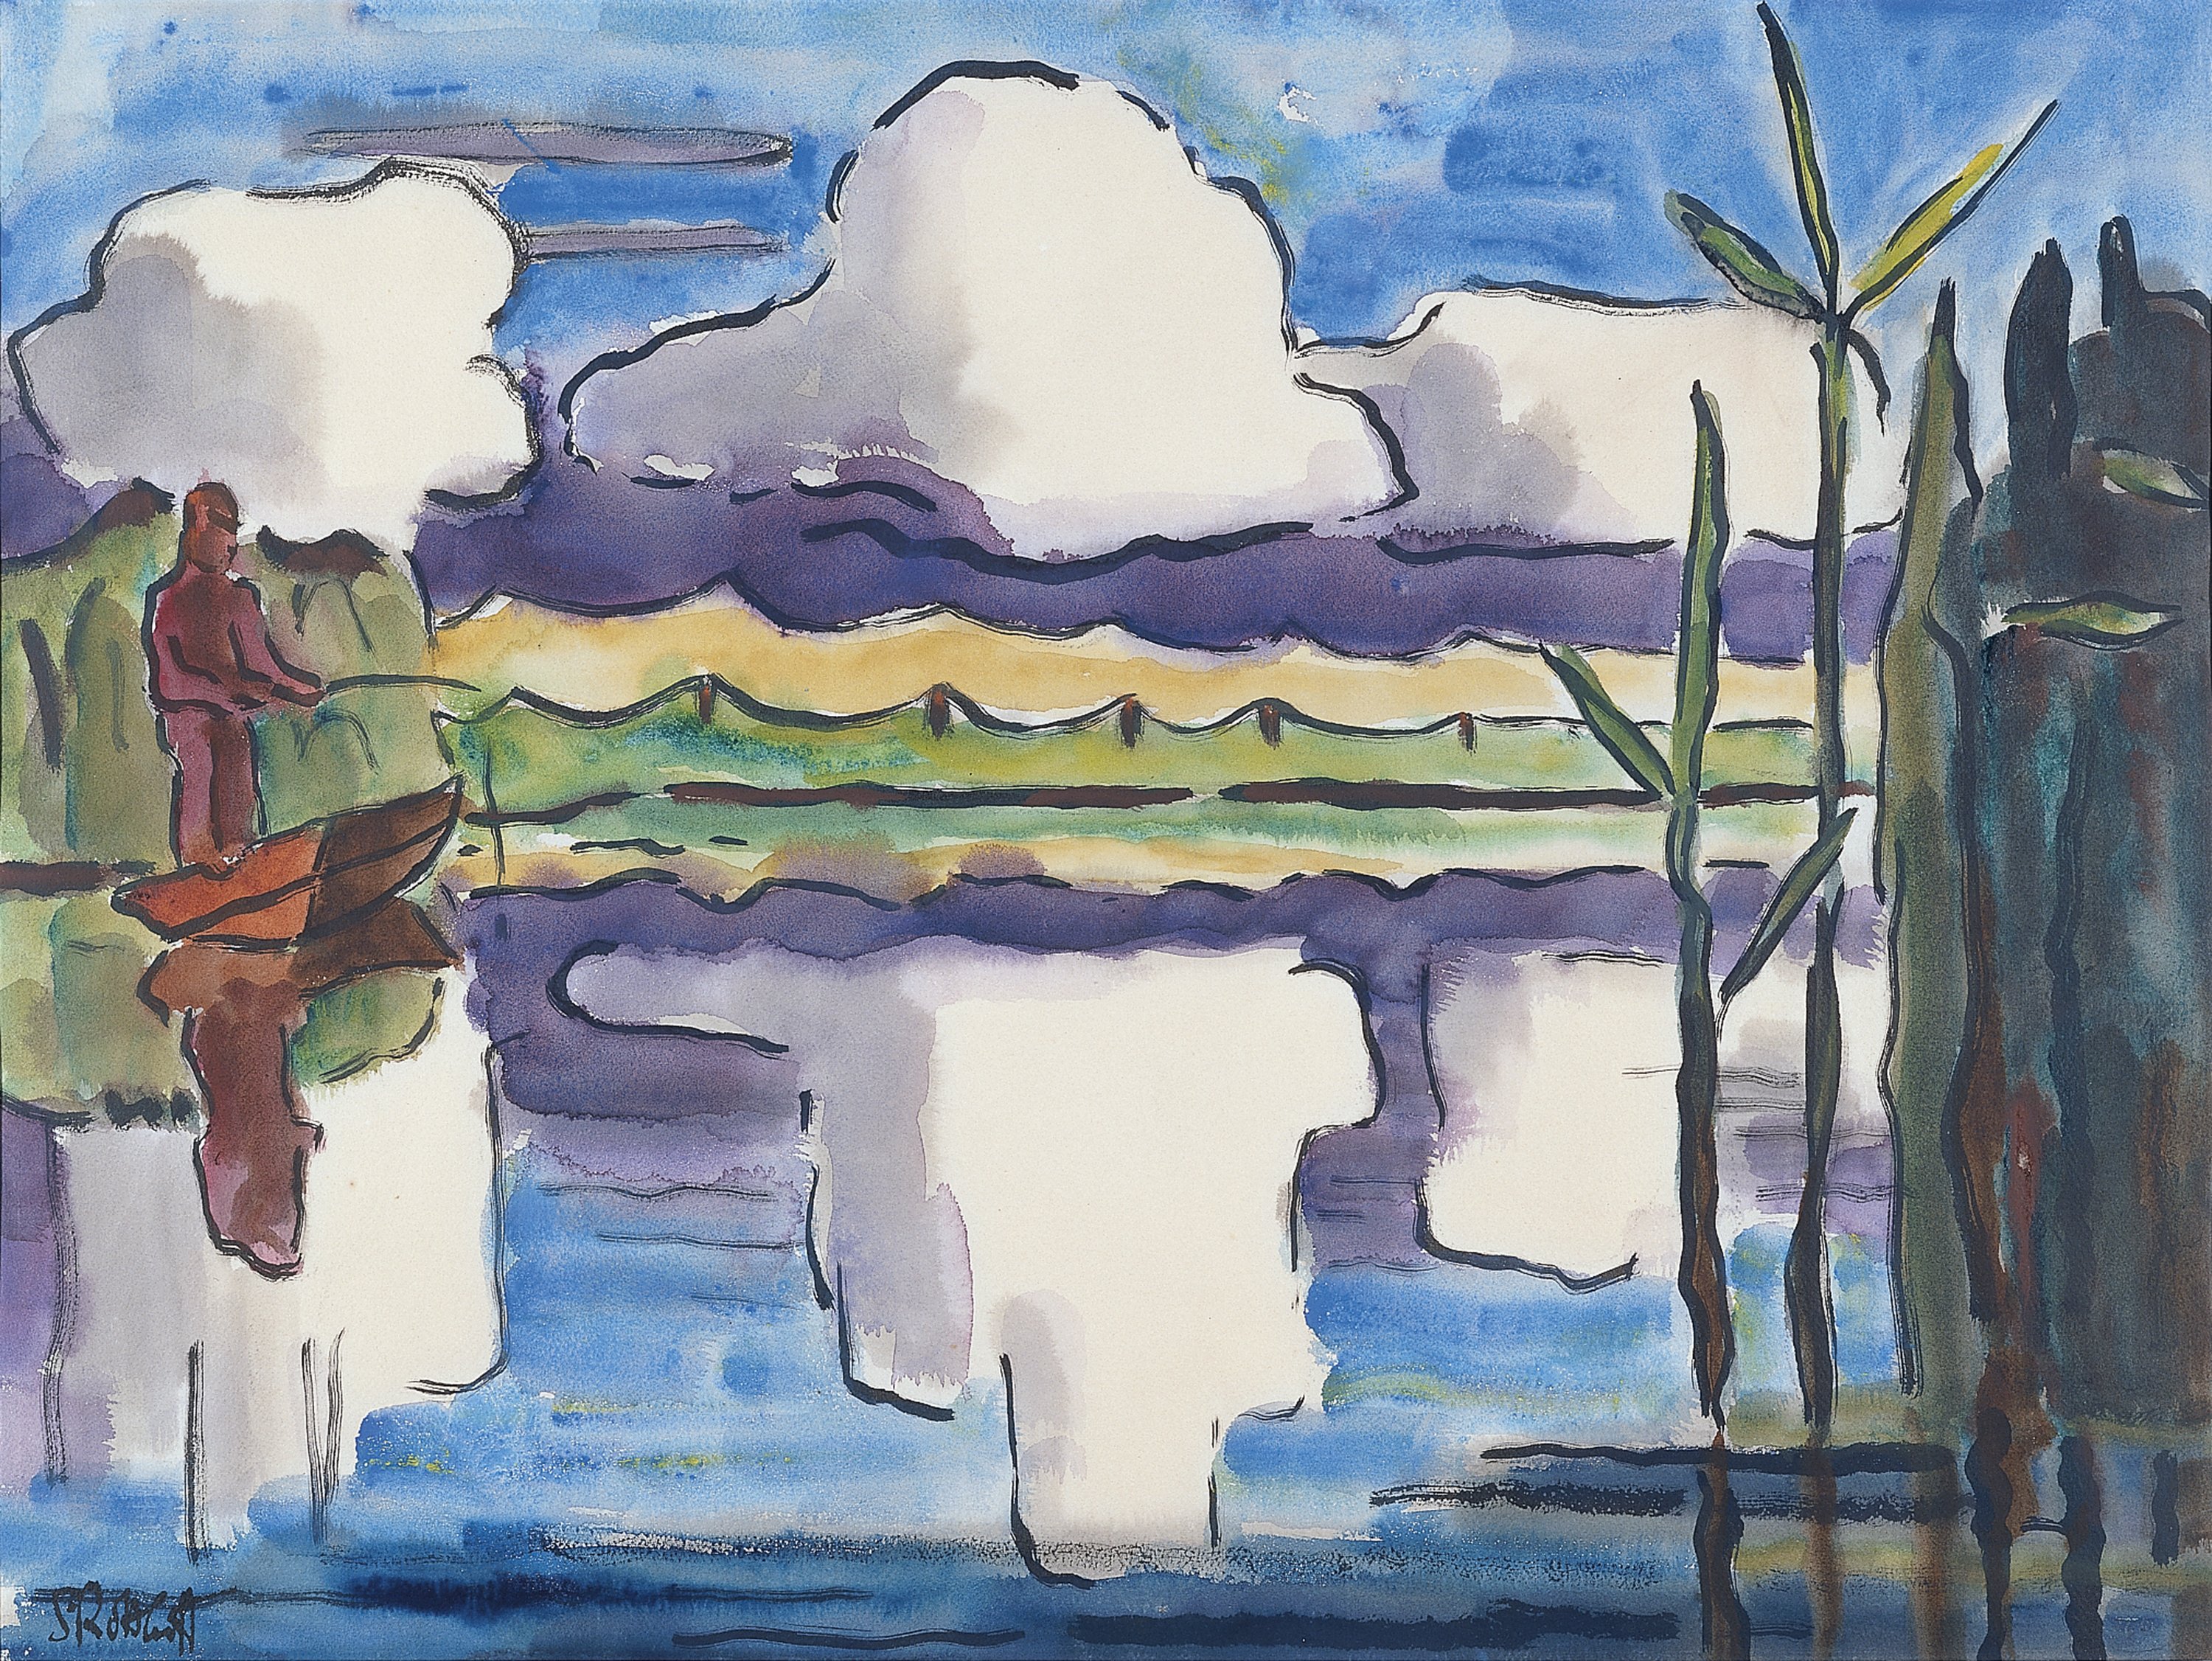 Reflecting Clouds. Reflejo de nubes, 1936